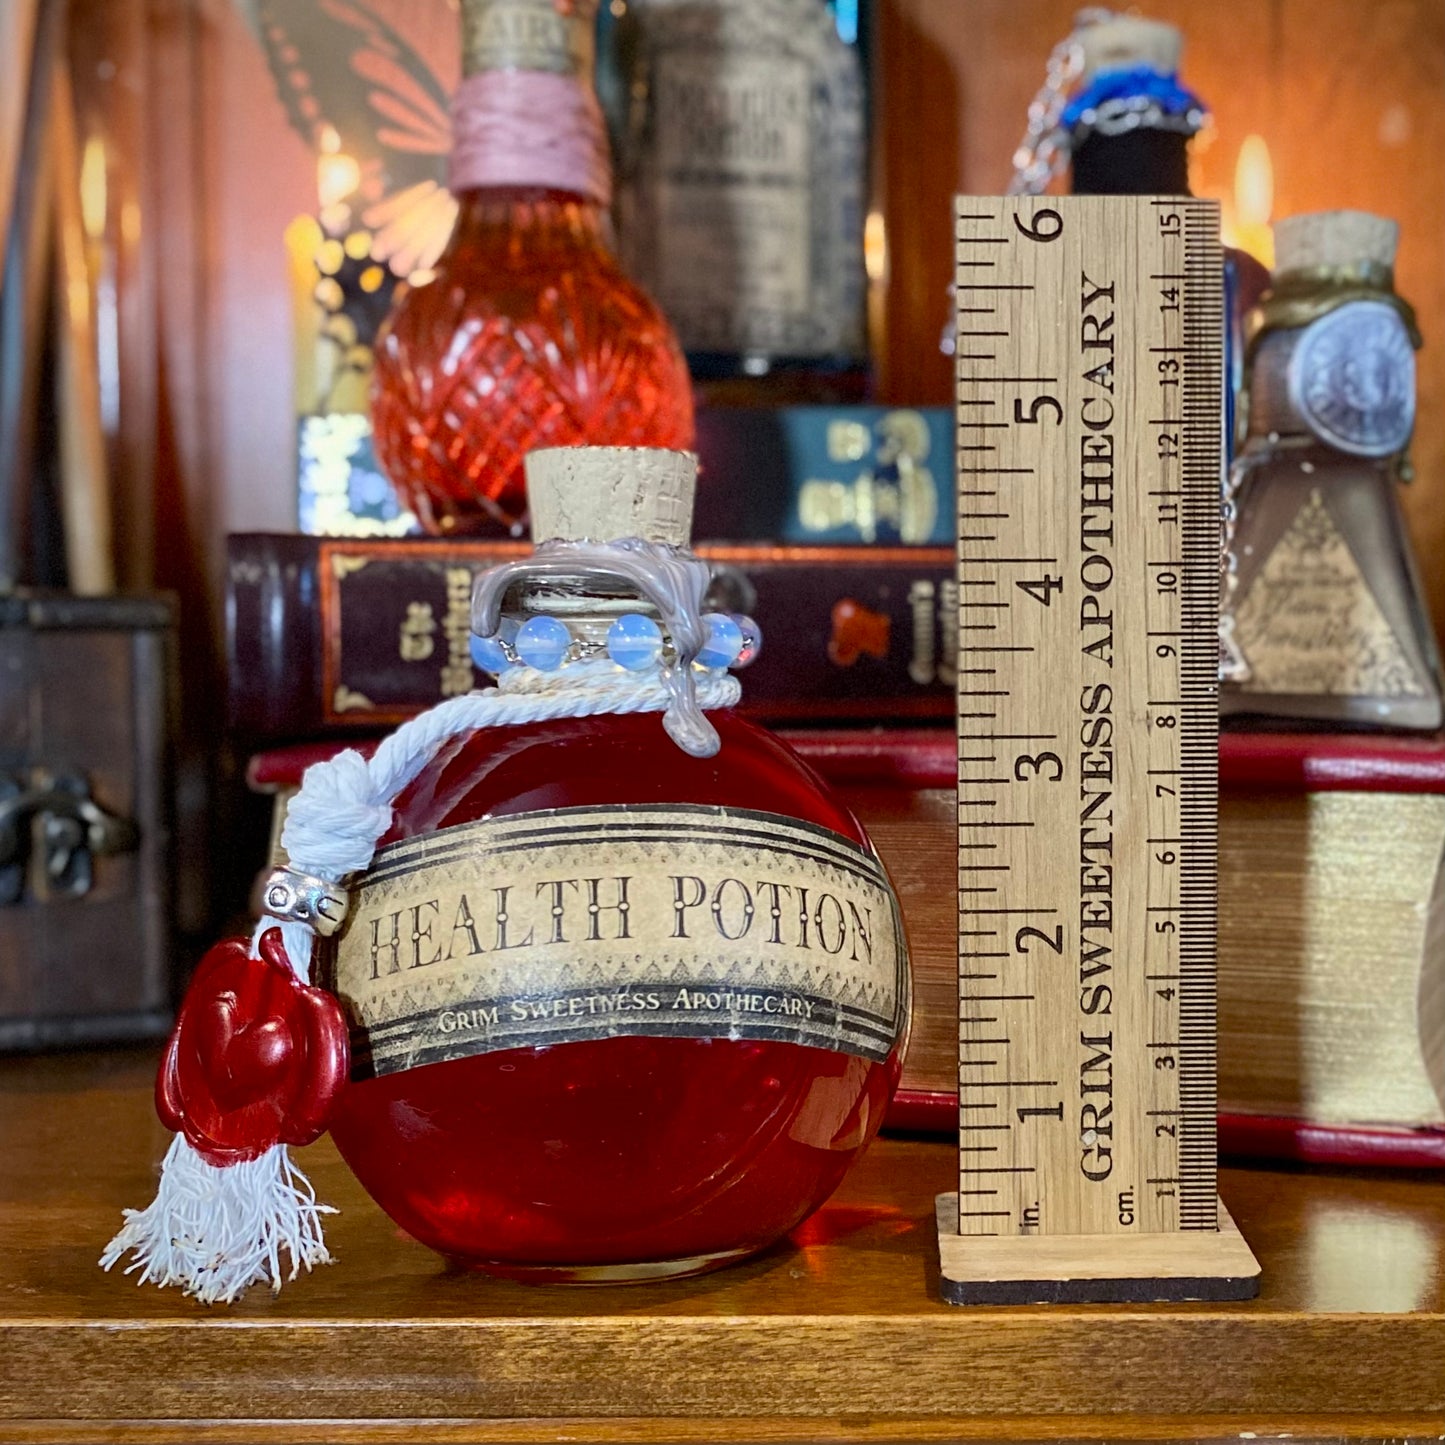 Health Potion, A Color Changing Potion Bottle Prop